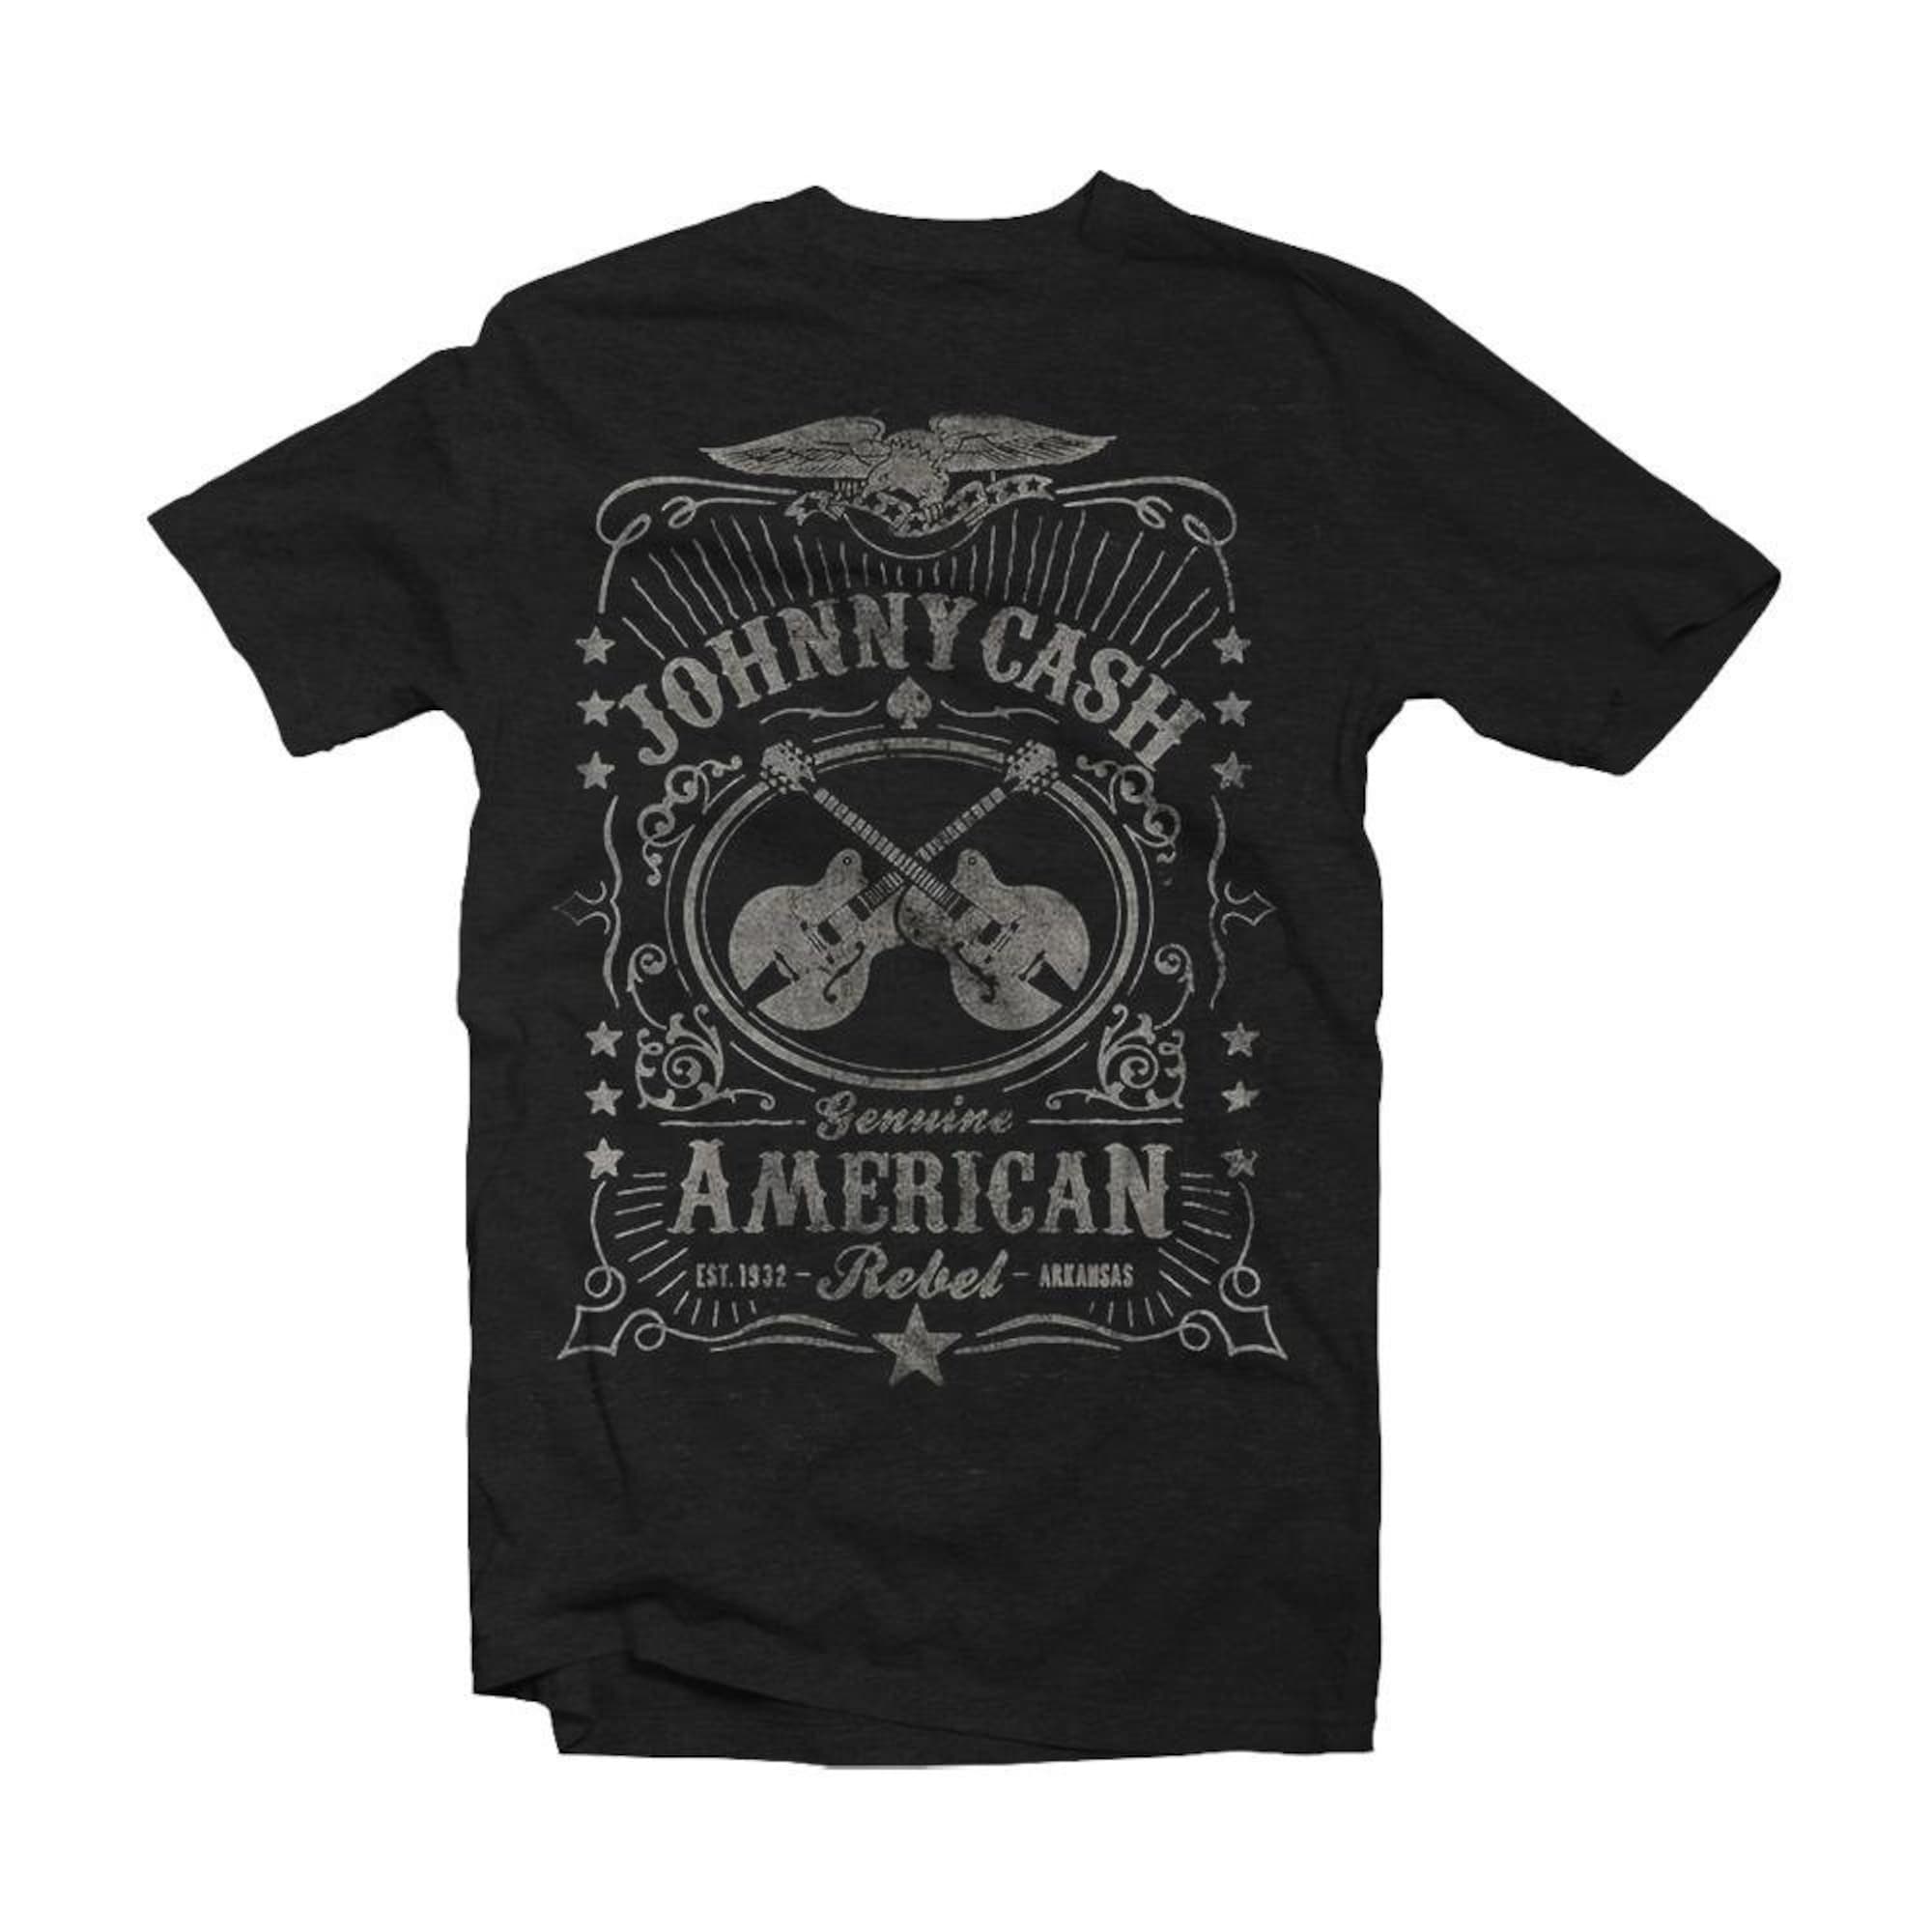 Johnny Cash T Shirt - American Rebel